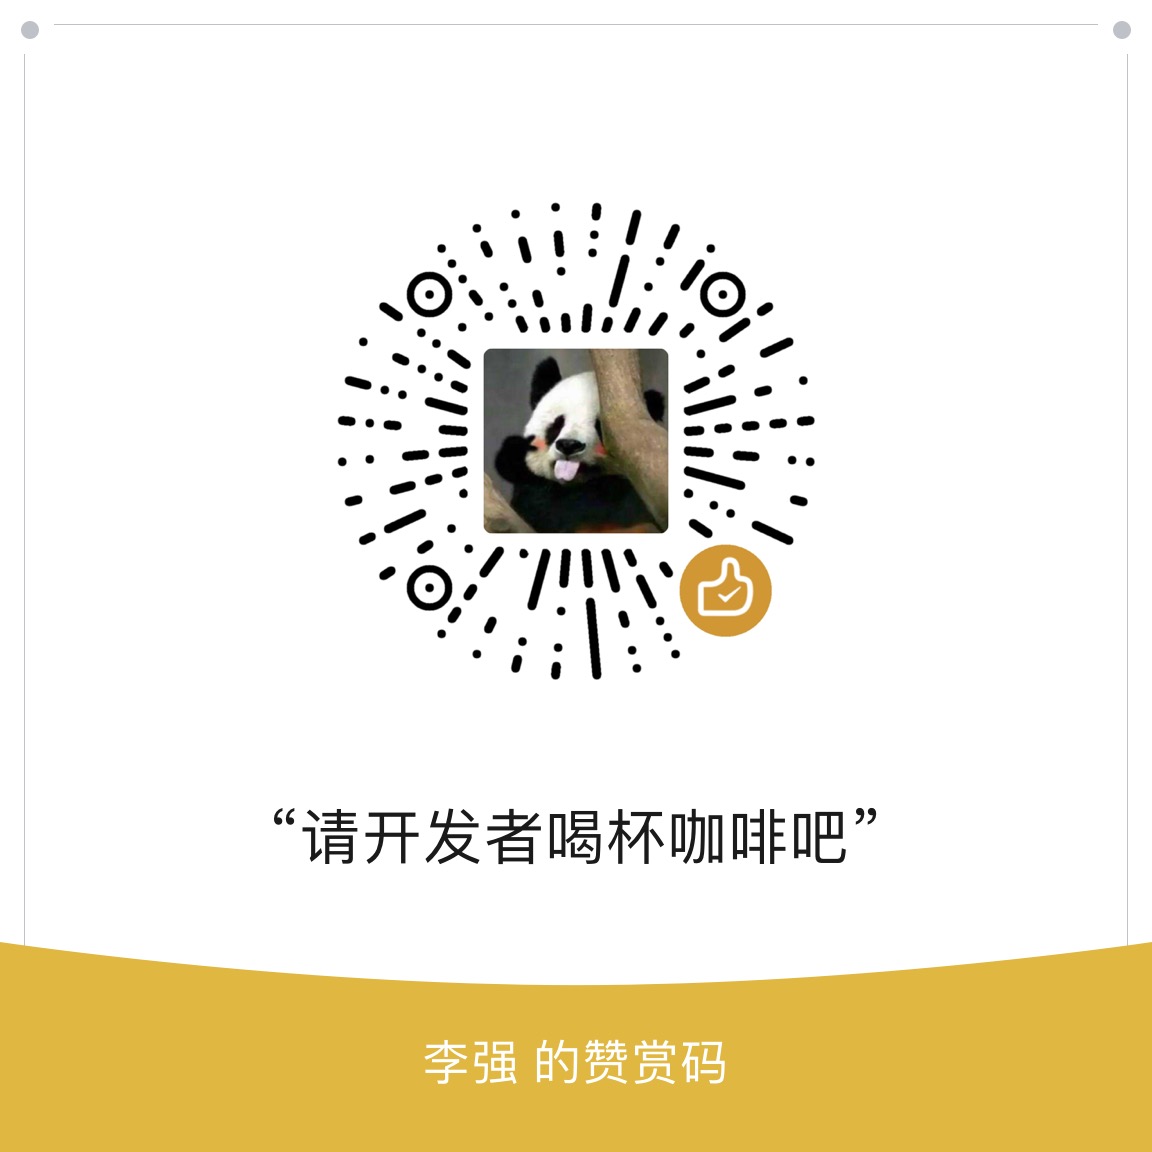 WeChat QR Code for Sponsorship